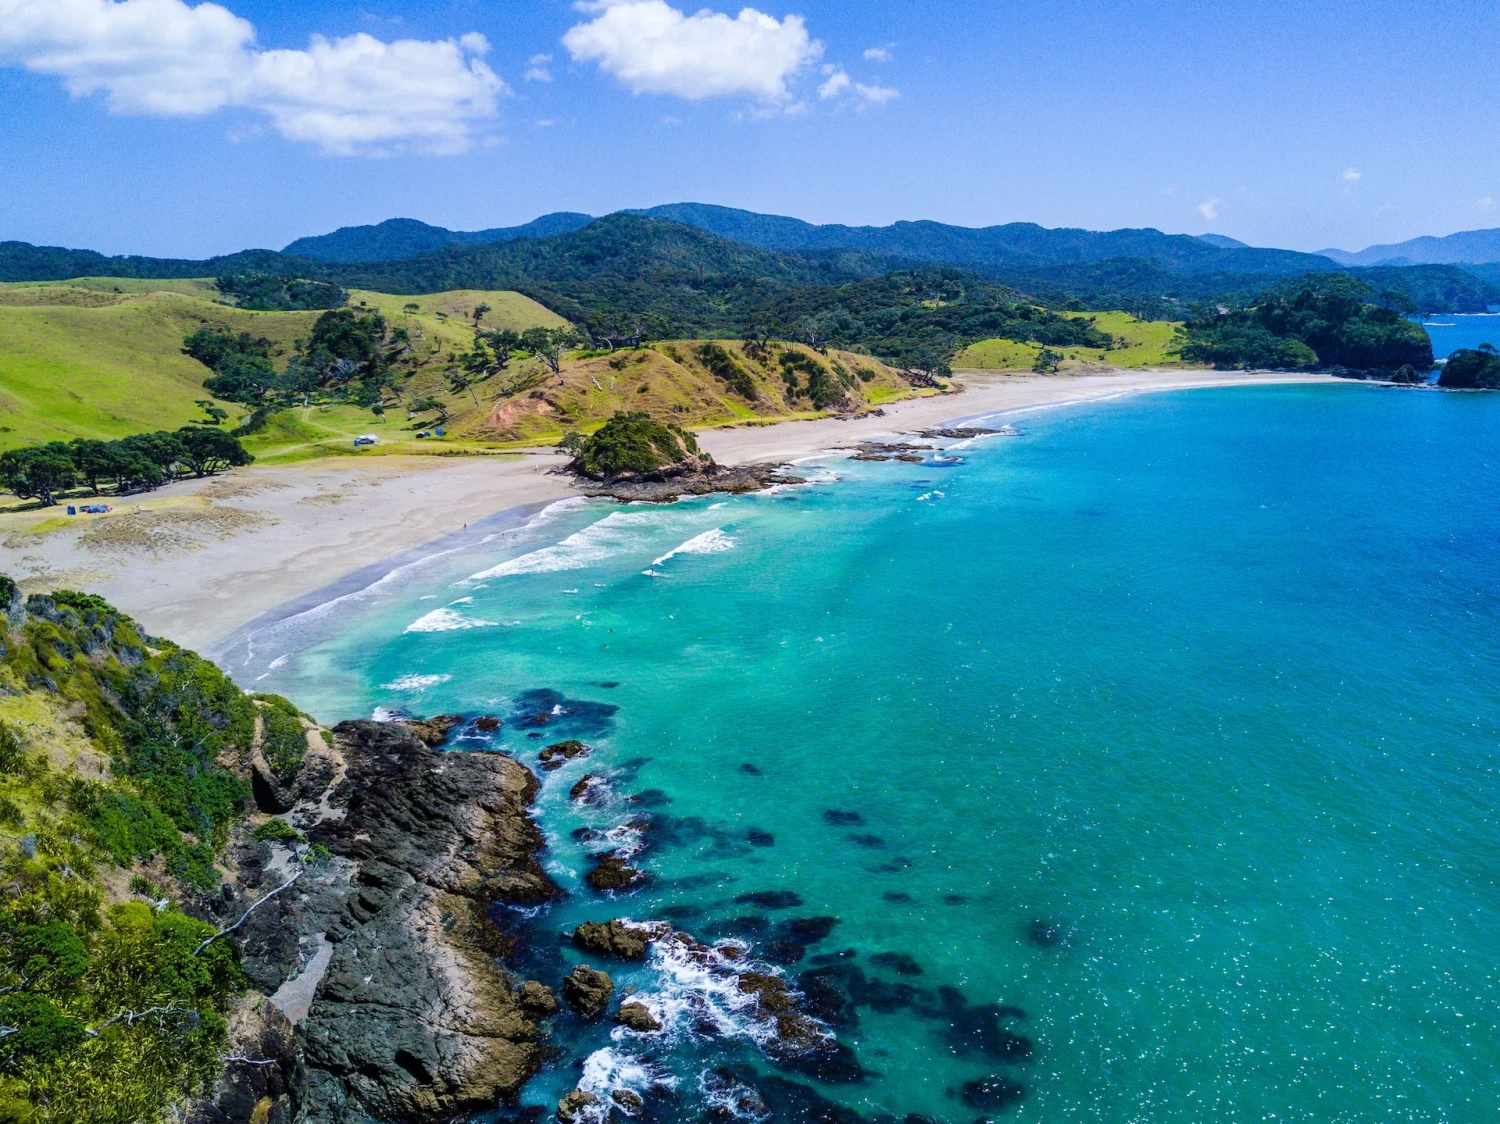 NZ beach - Credit: Rod Long, unsplash